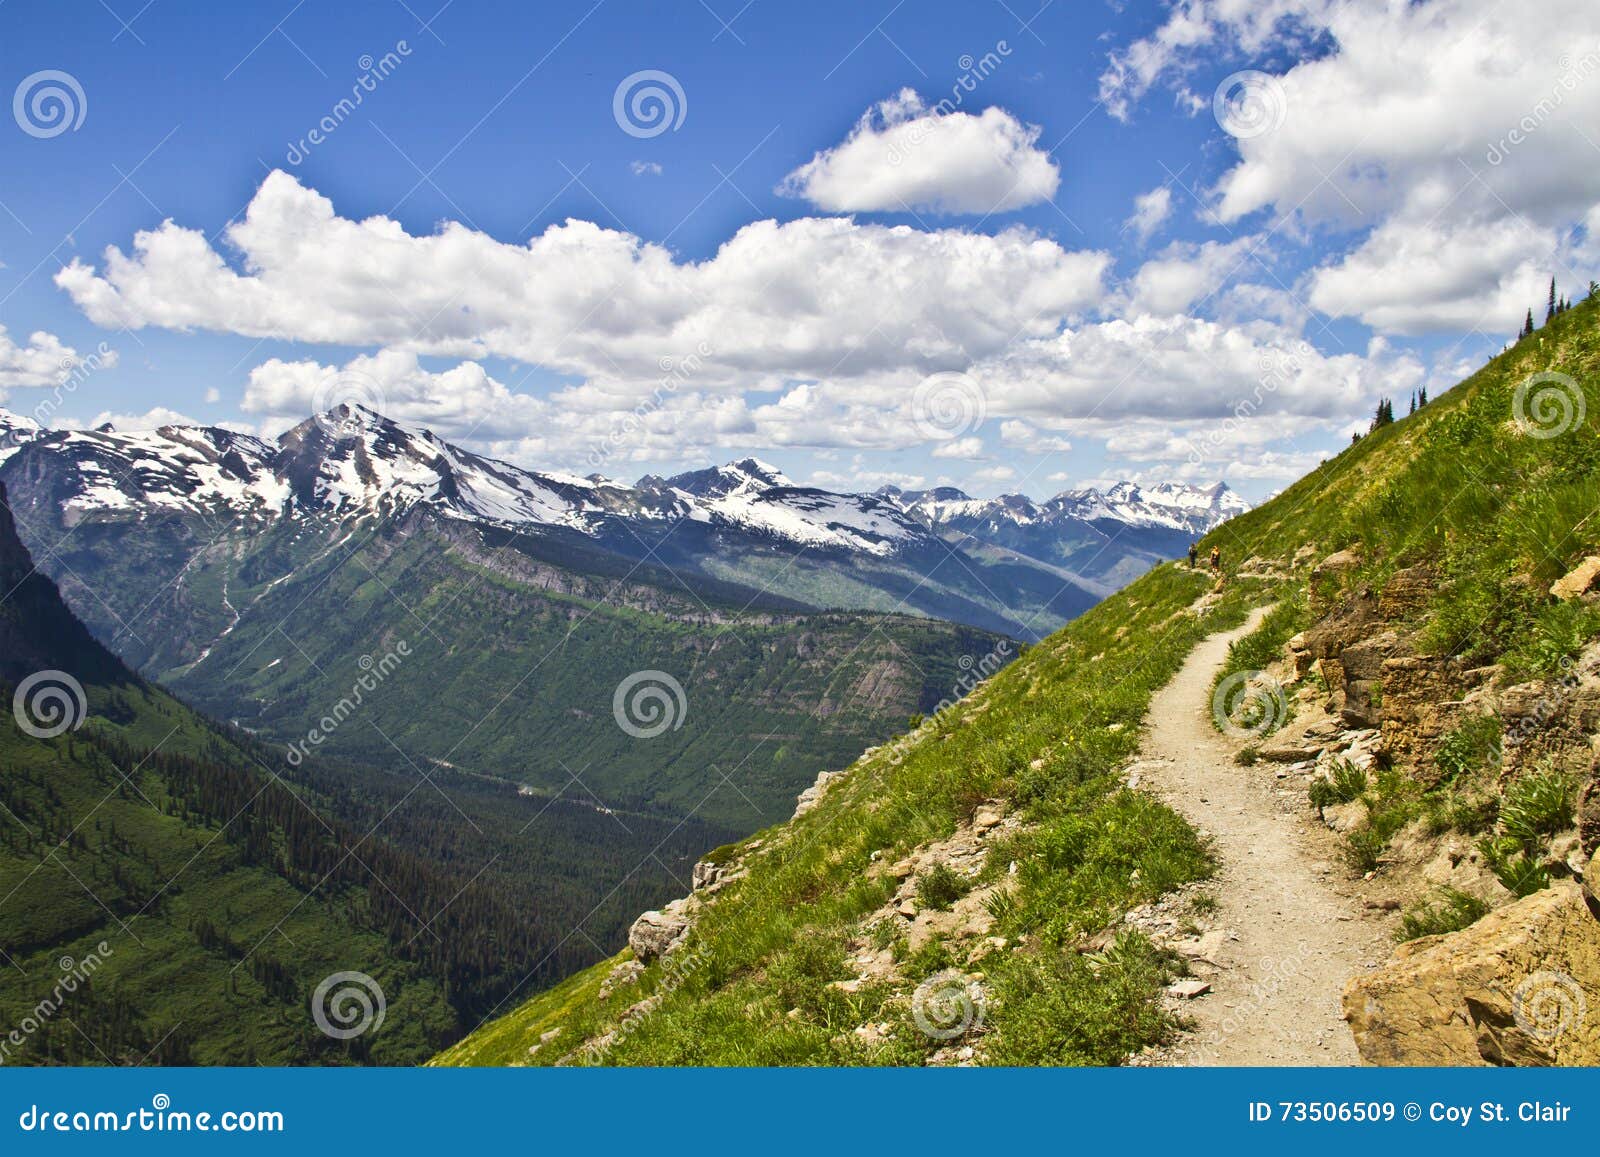 mountain hiking trail in glacier national park, montana, usa